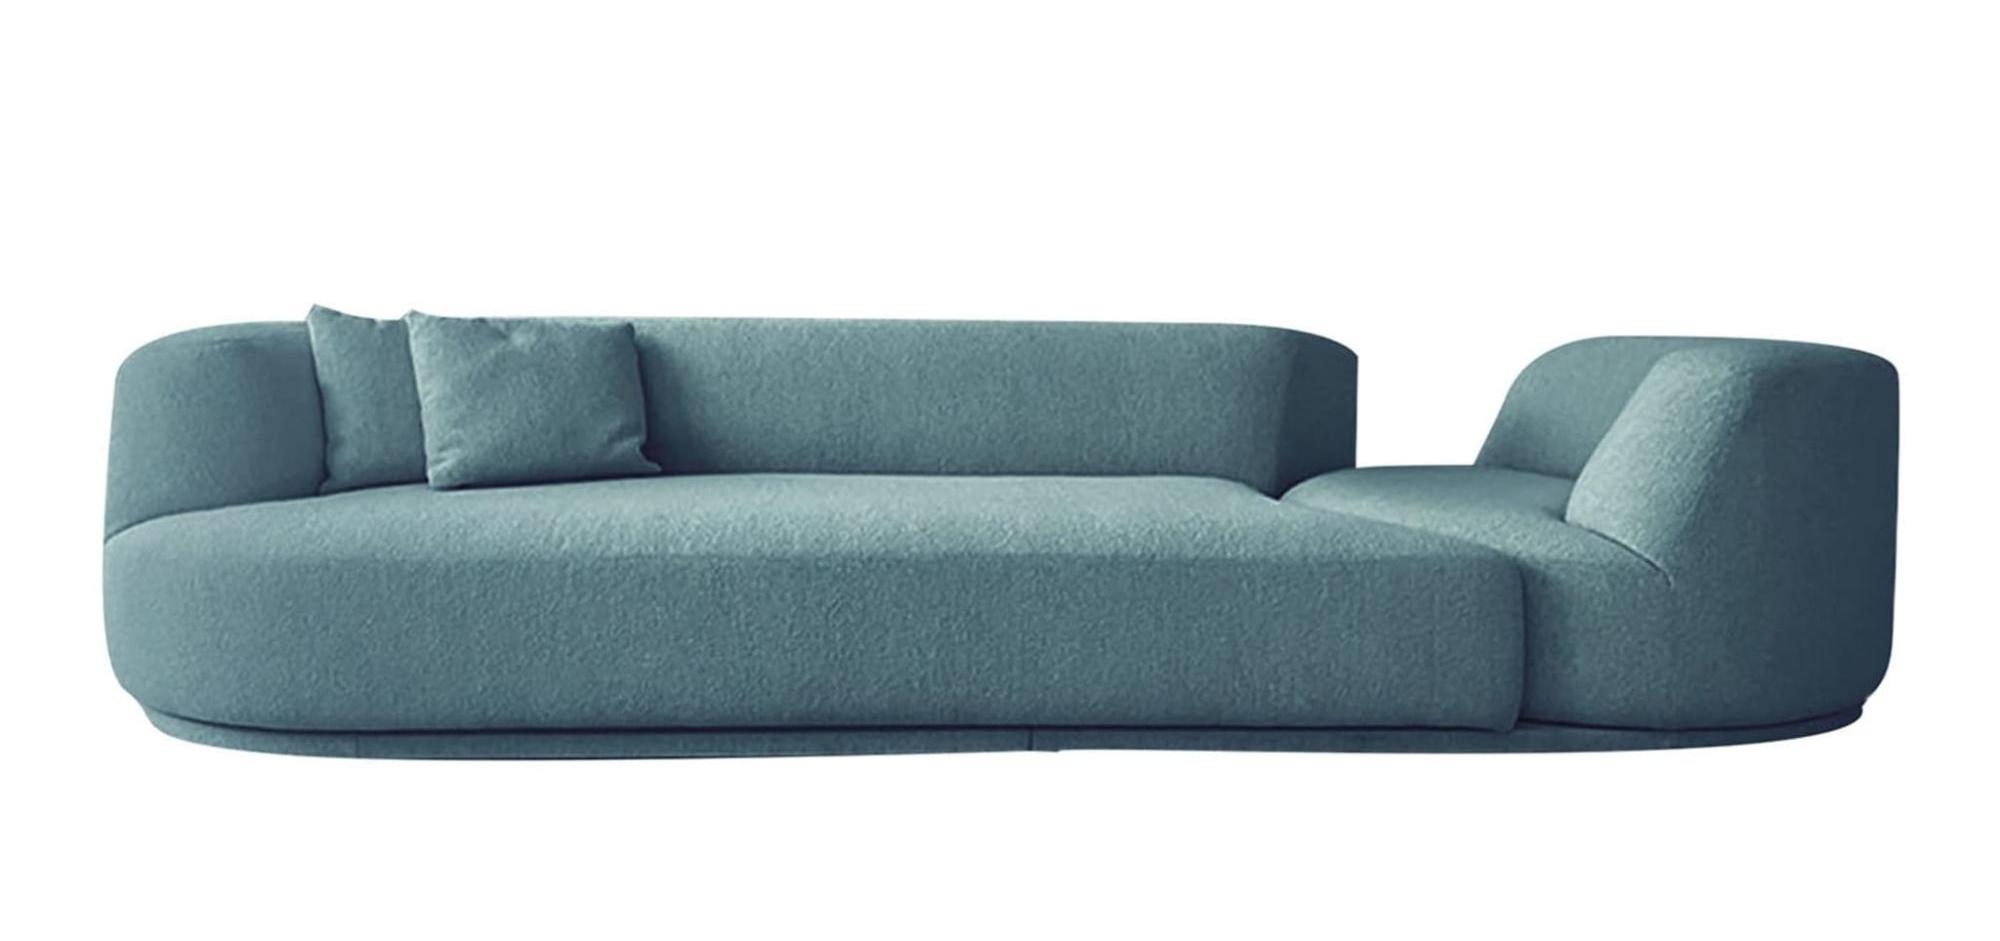 Bordone Italian Luxury Sofa